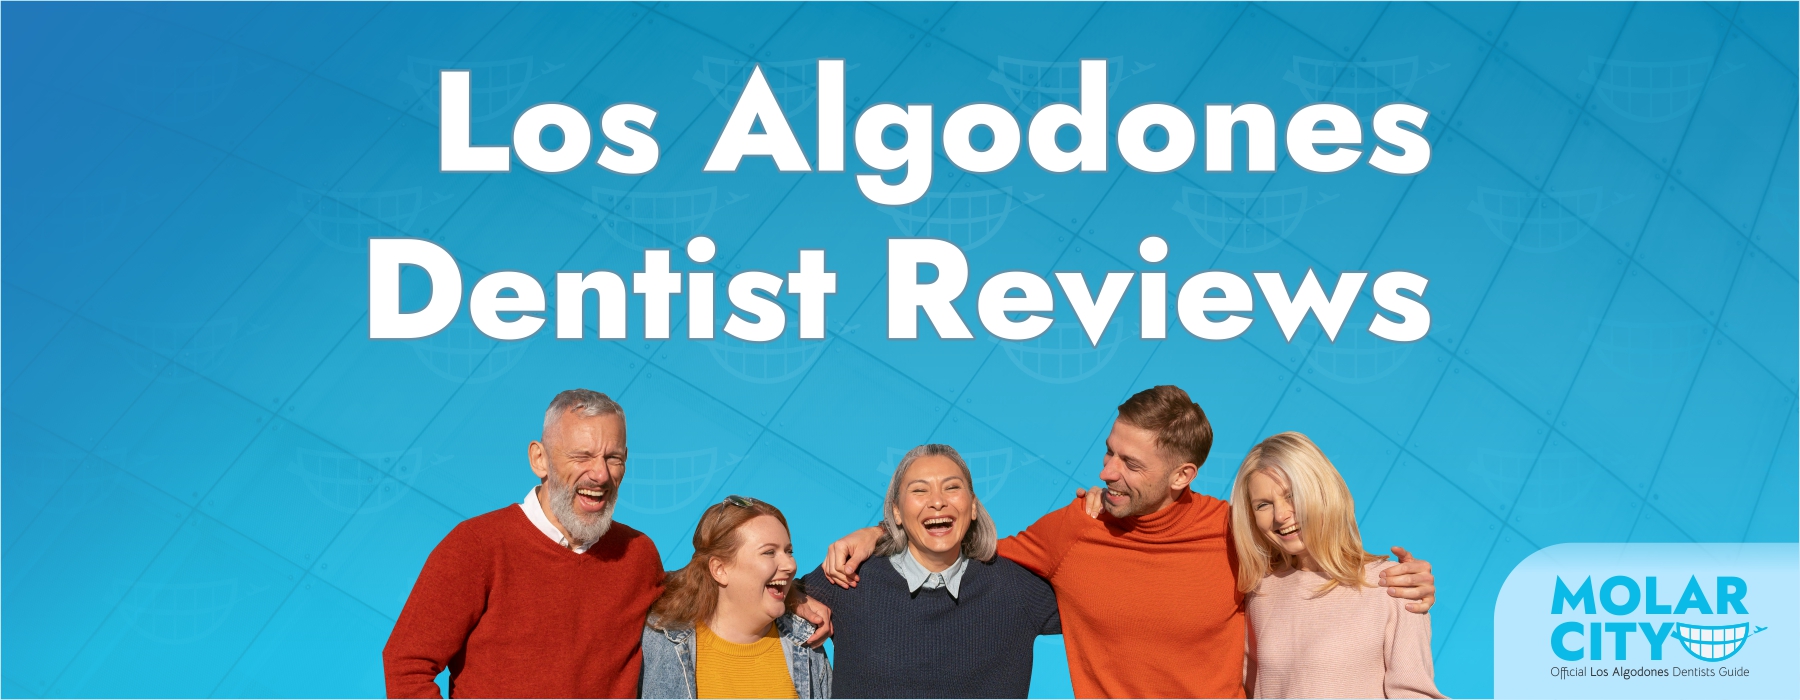 Los Algodones Dentists Reviews